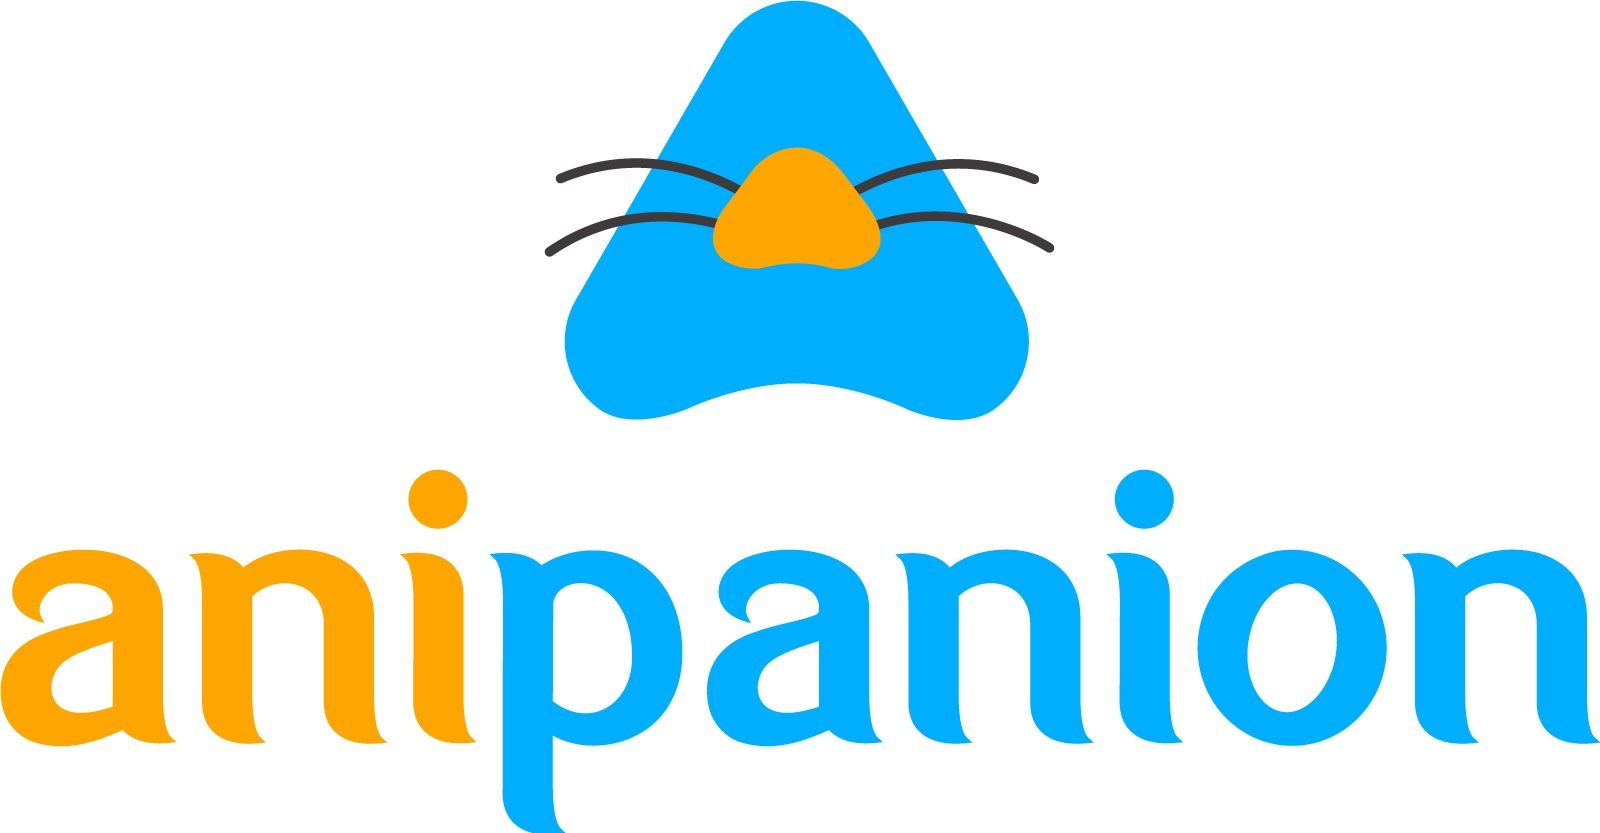 Anipanion logo